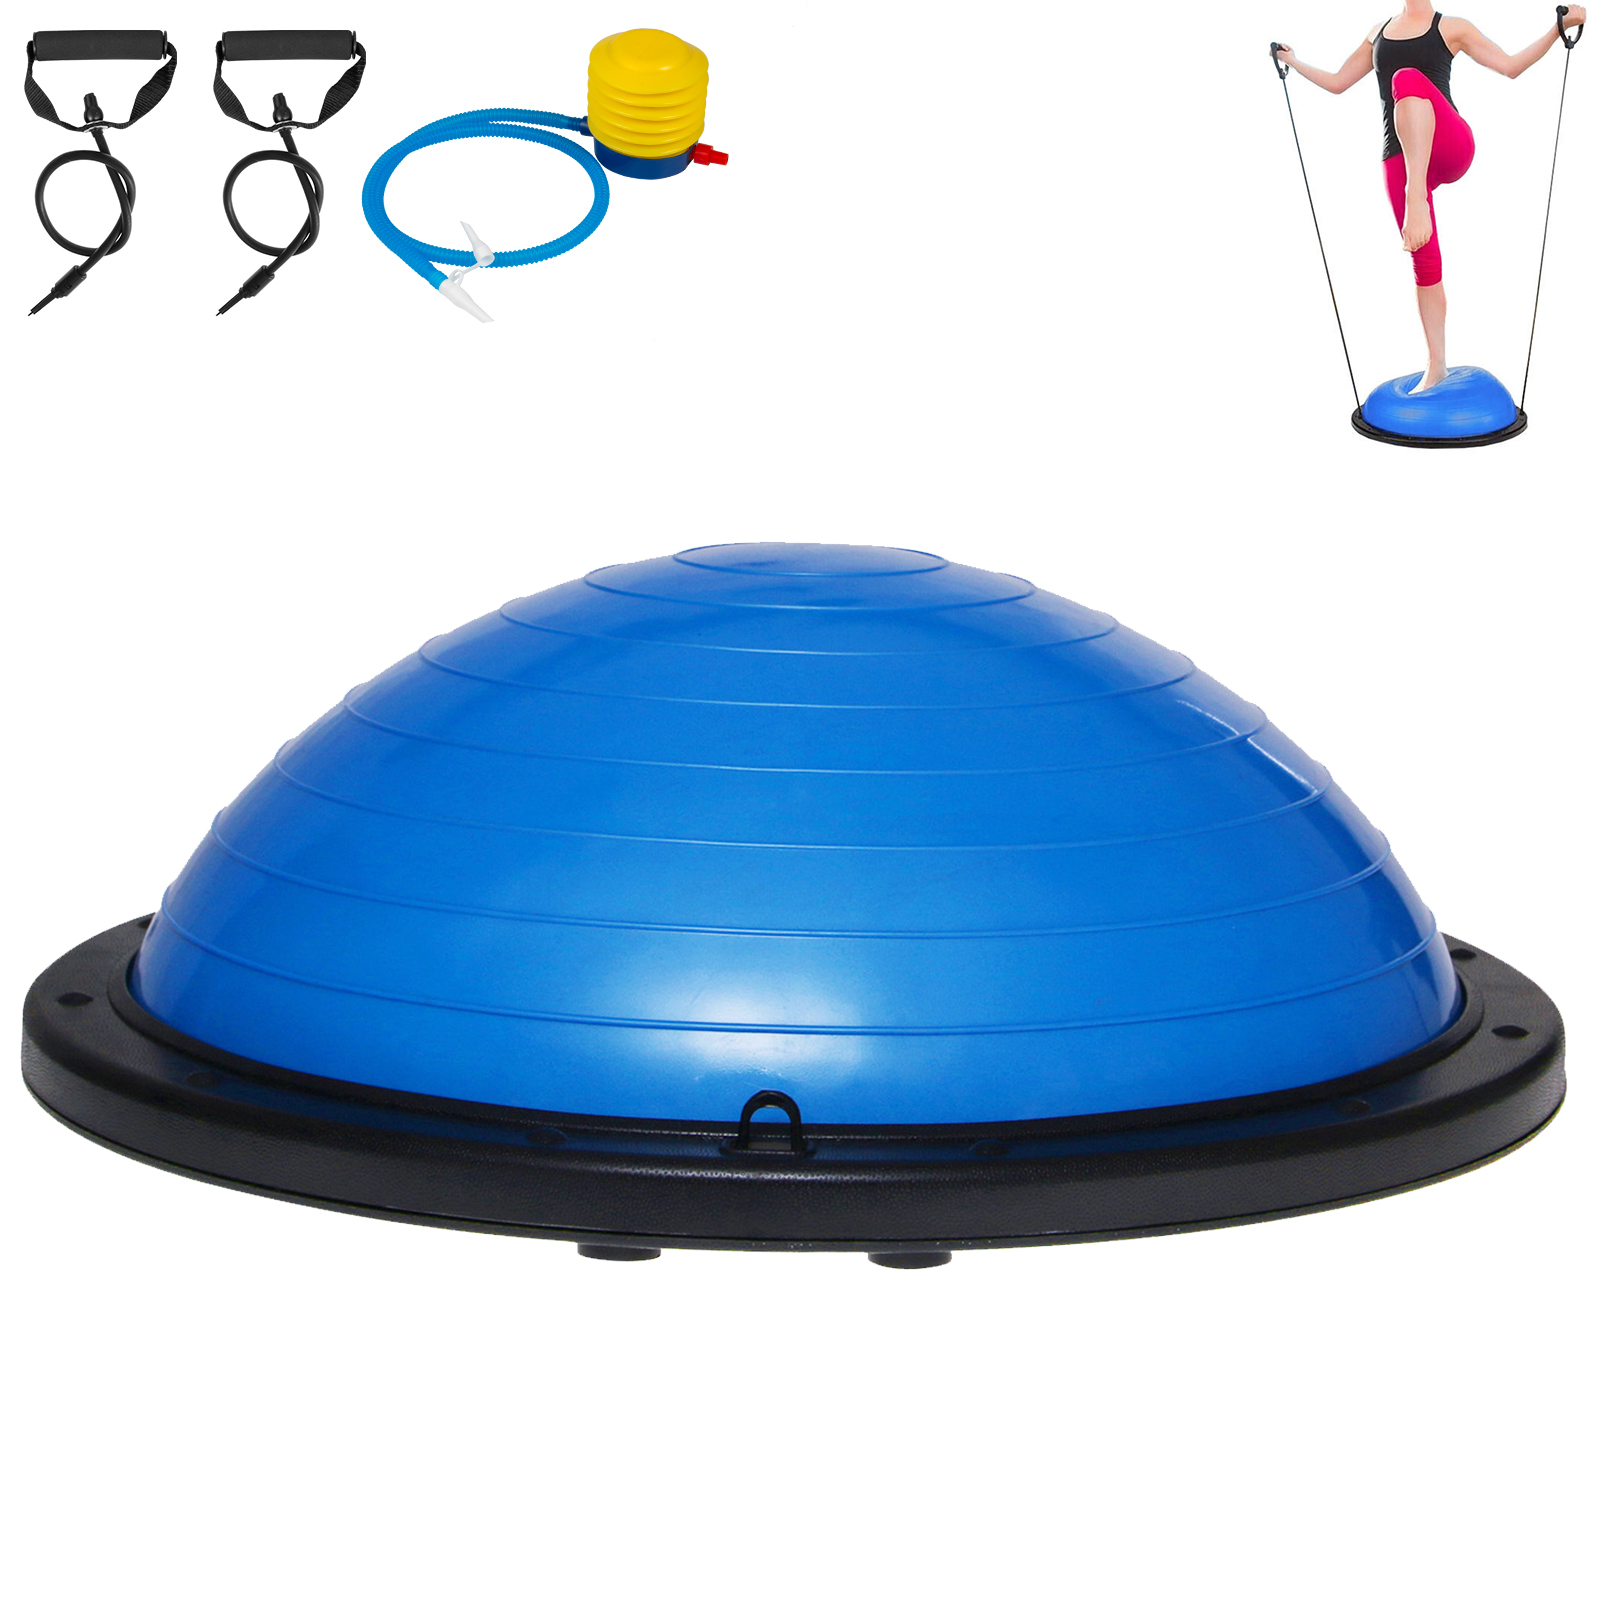 VEVOR 23 Balance Yoga Trainer Ball Kit W/ Pump Blue Outdoor Strength Aerobic от Vevor Many GEOs